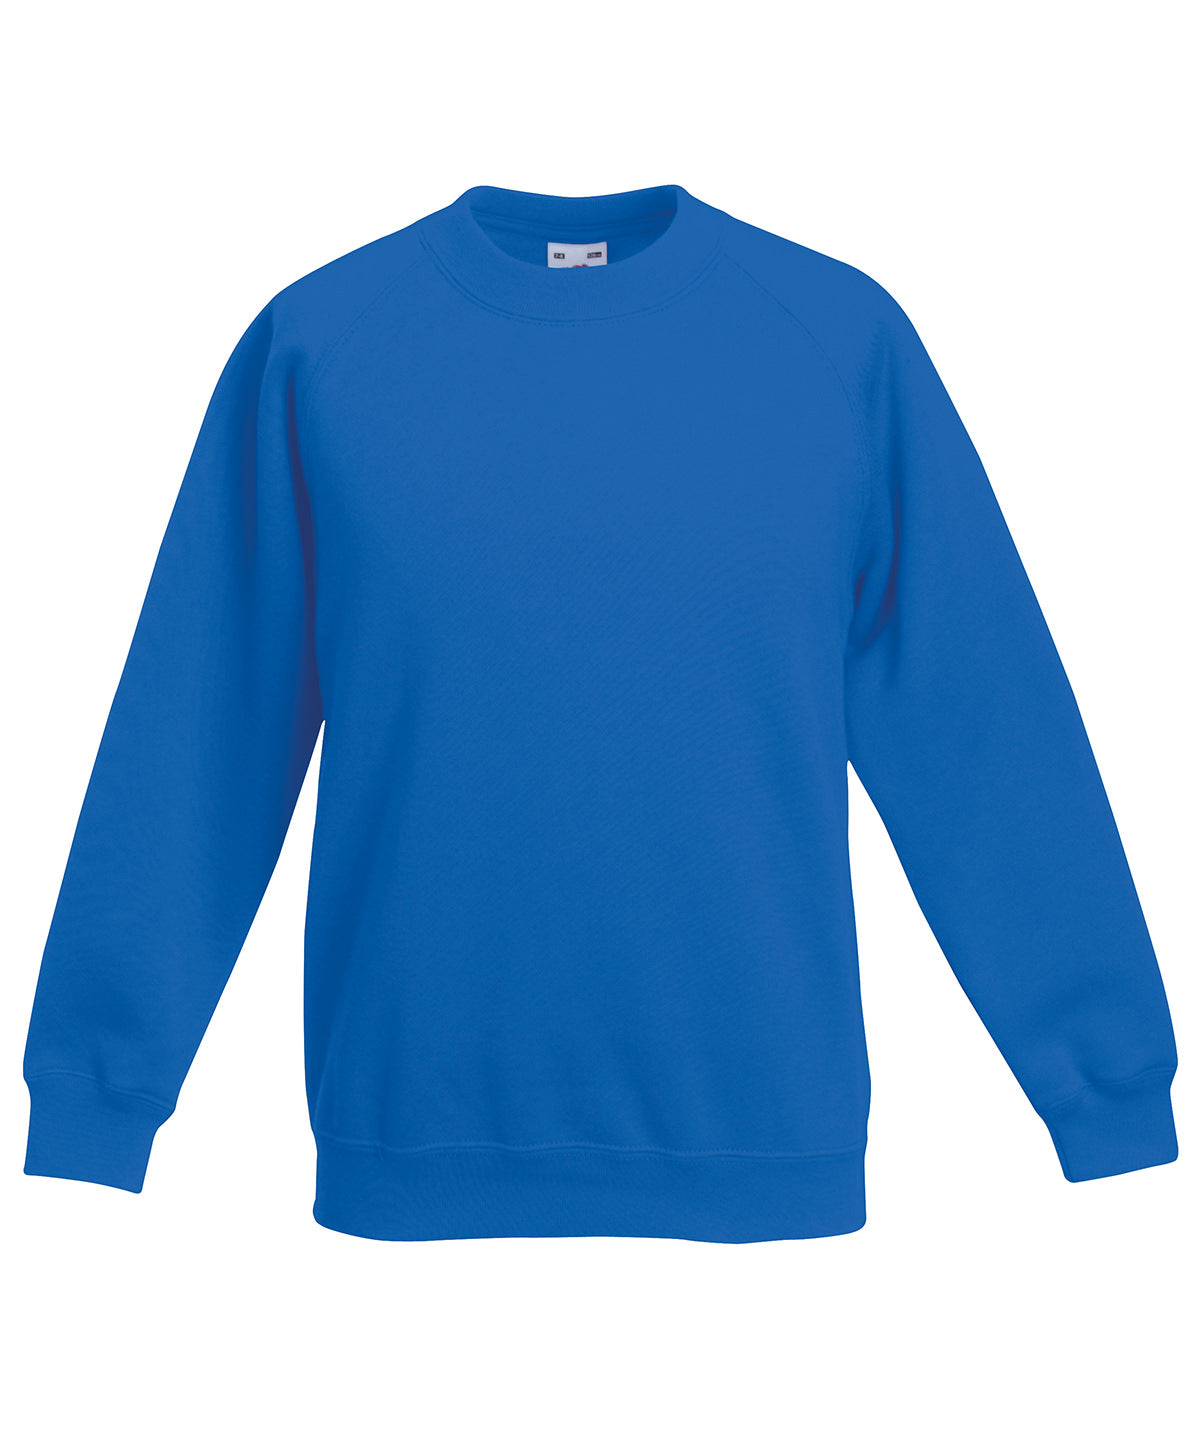 Personalised Sweatshirts - Bottle Fruit of the Loom Kids classic raglan sweatshirt